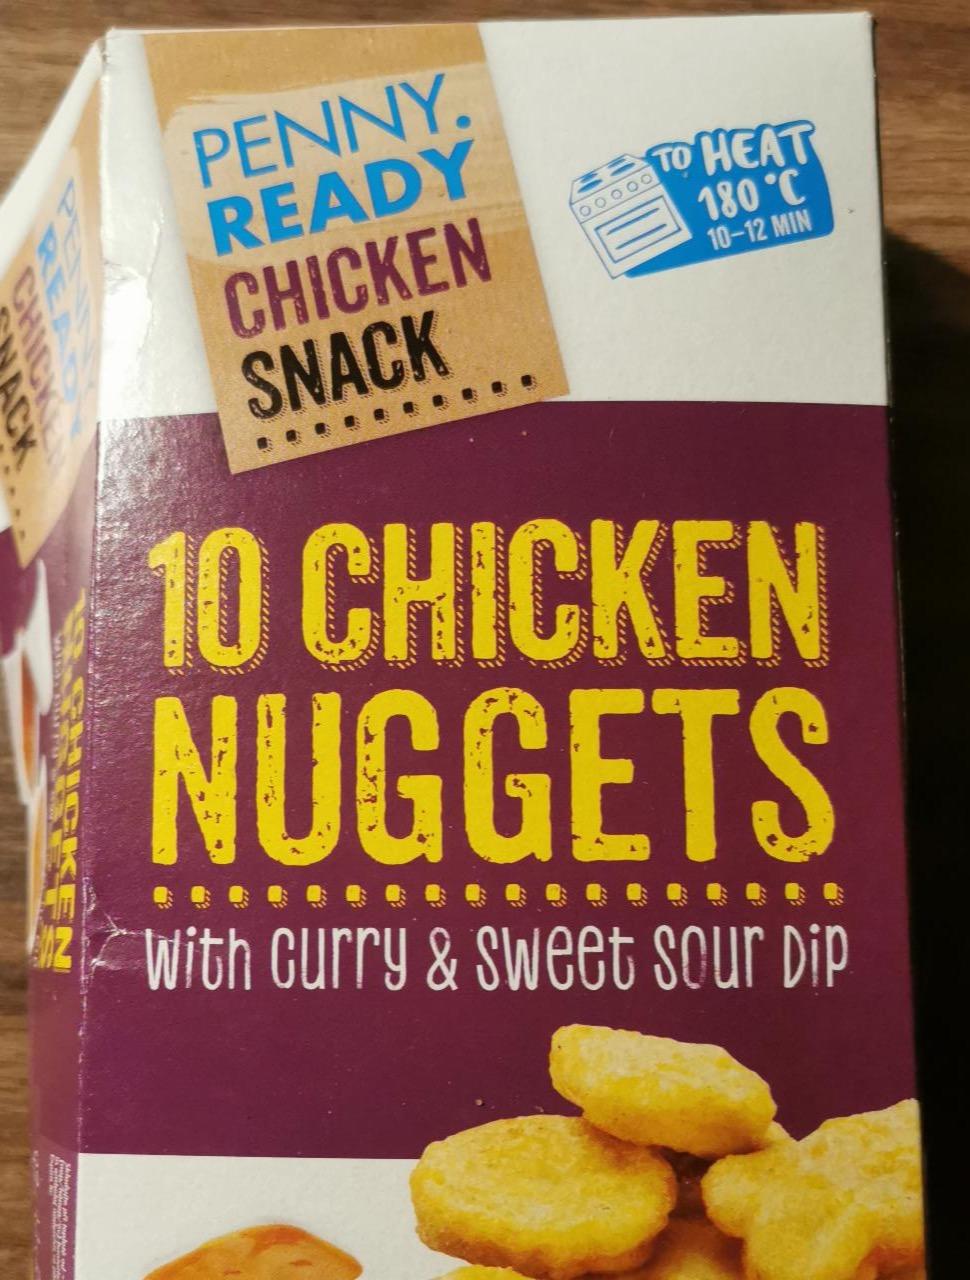 Képek - 10 chicken nuggets Penny ready